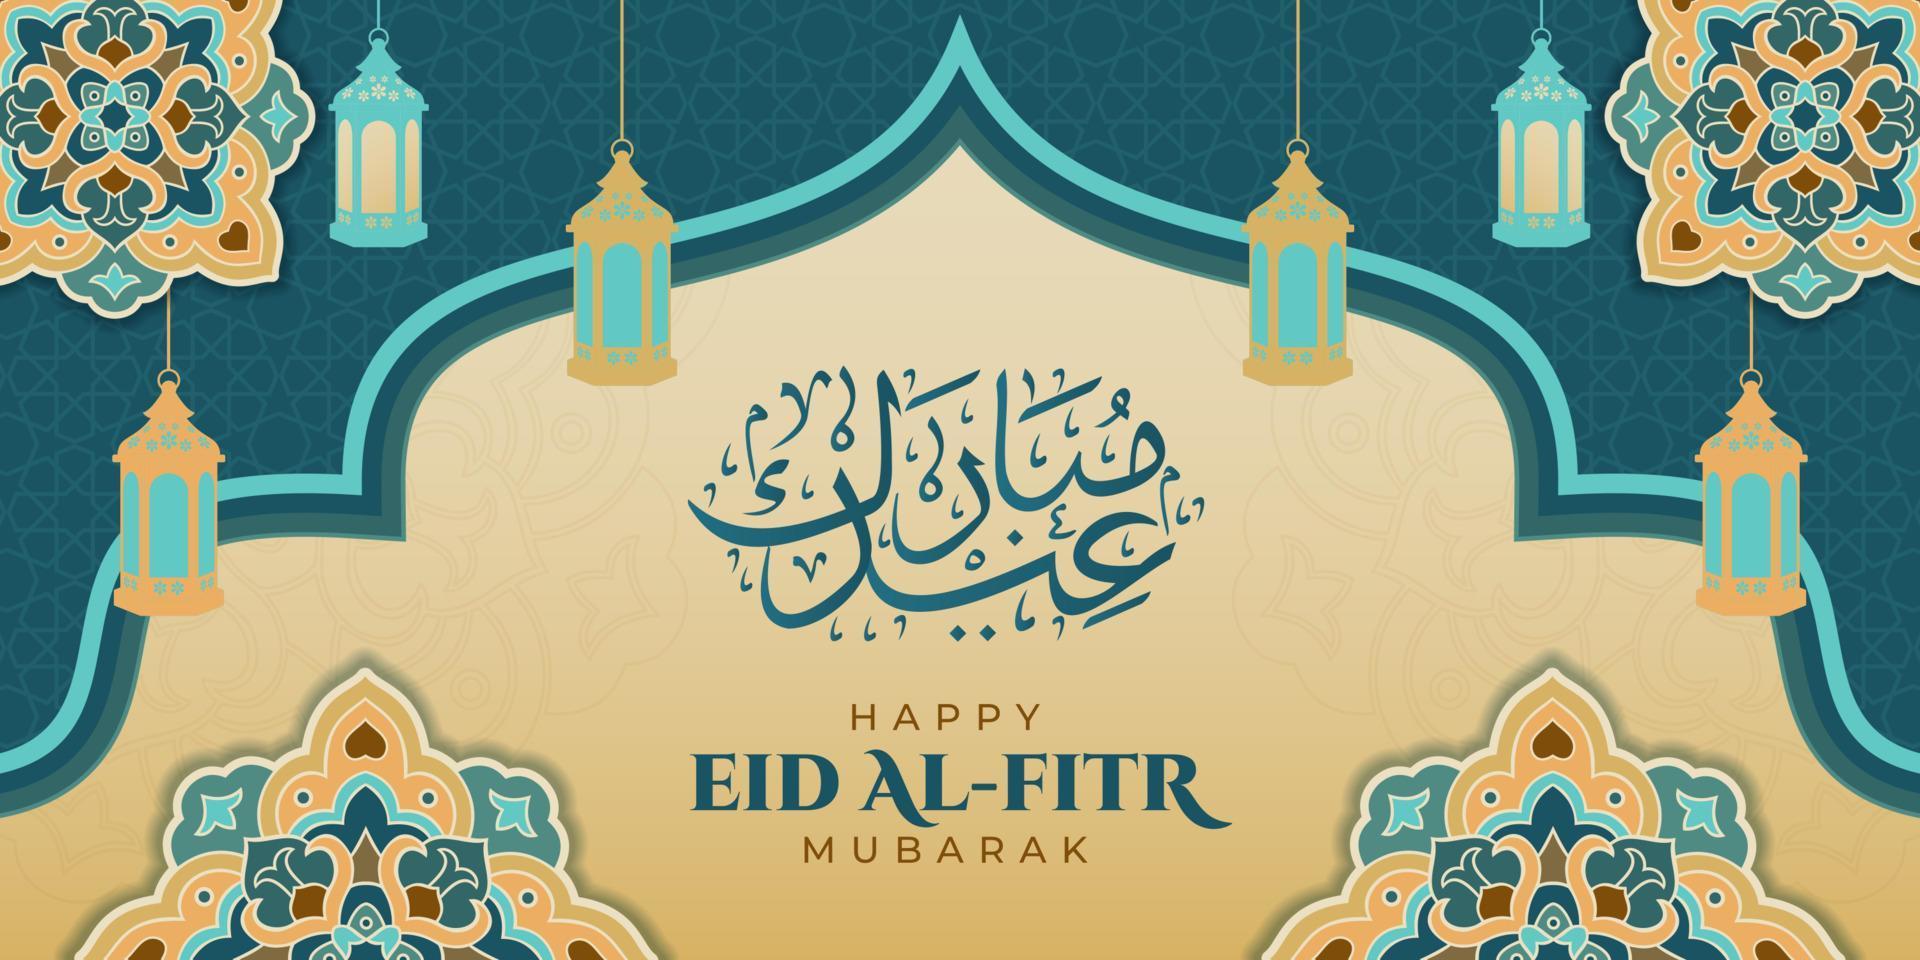 Eid al fitr mubarak greeting, Islamic ornament template for background